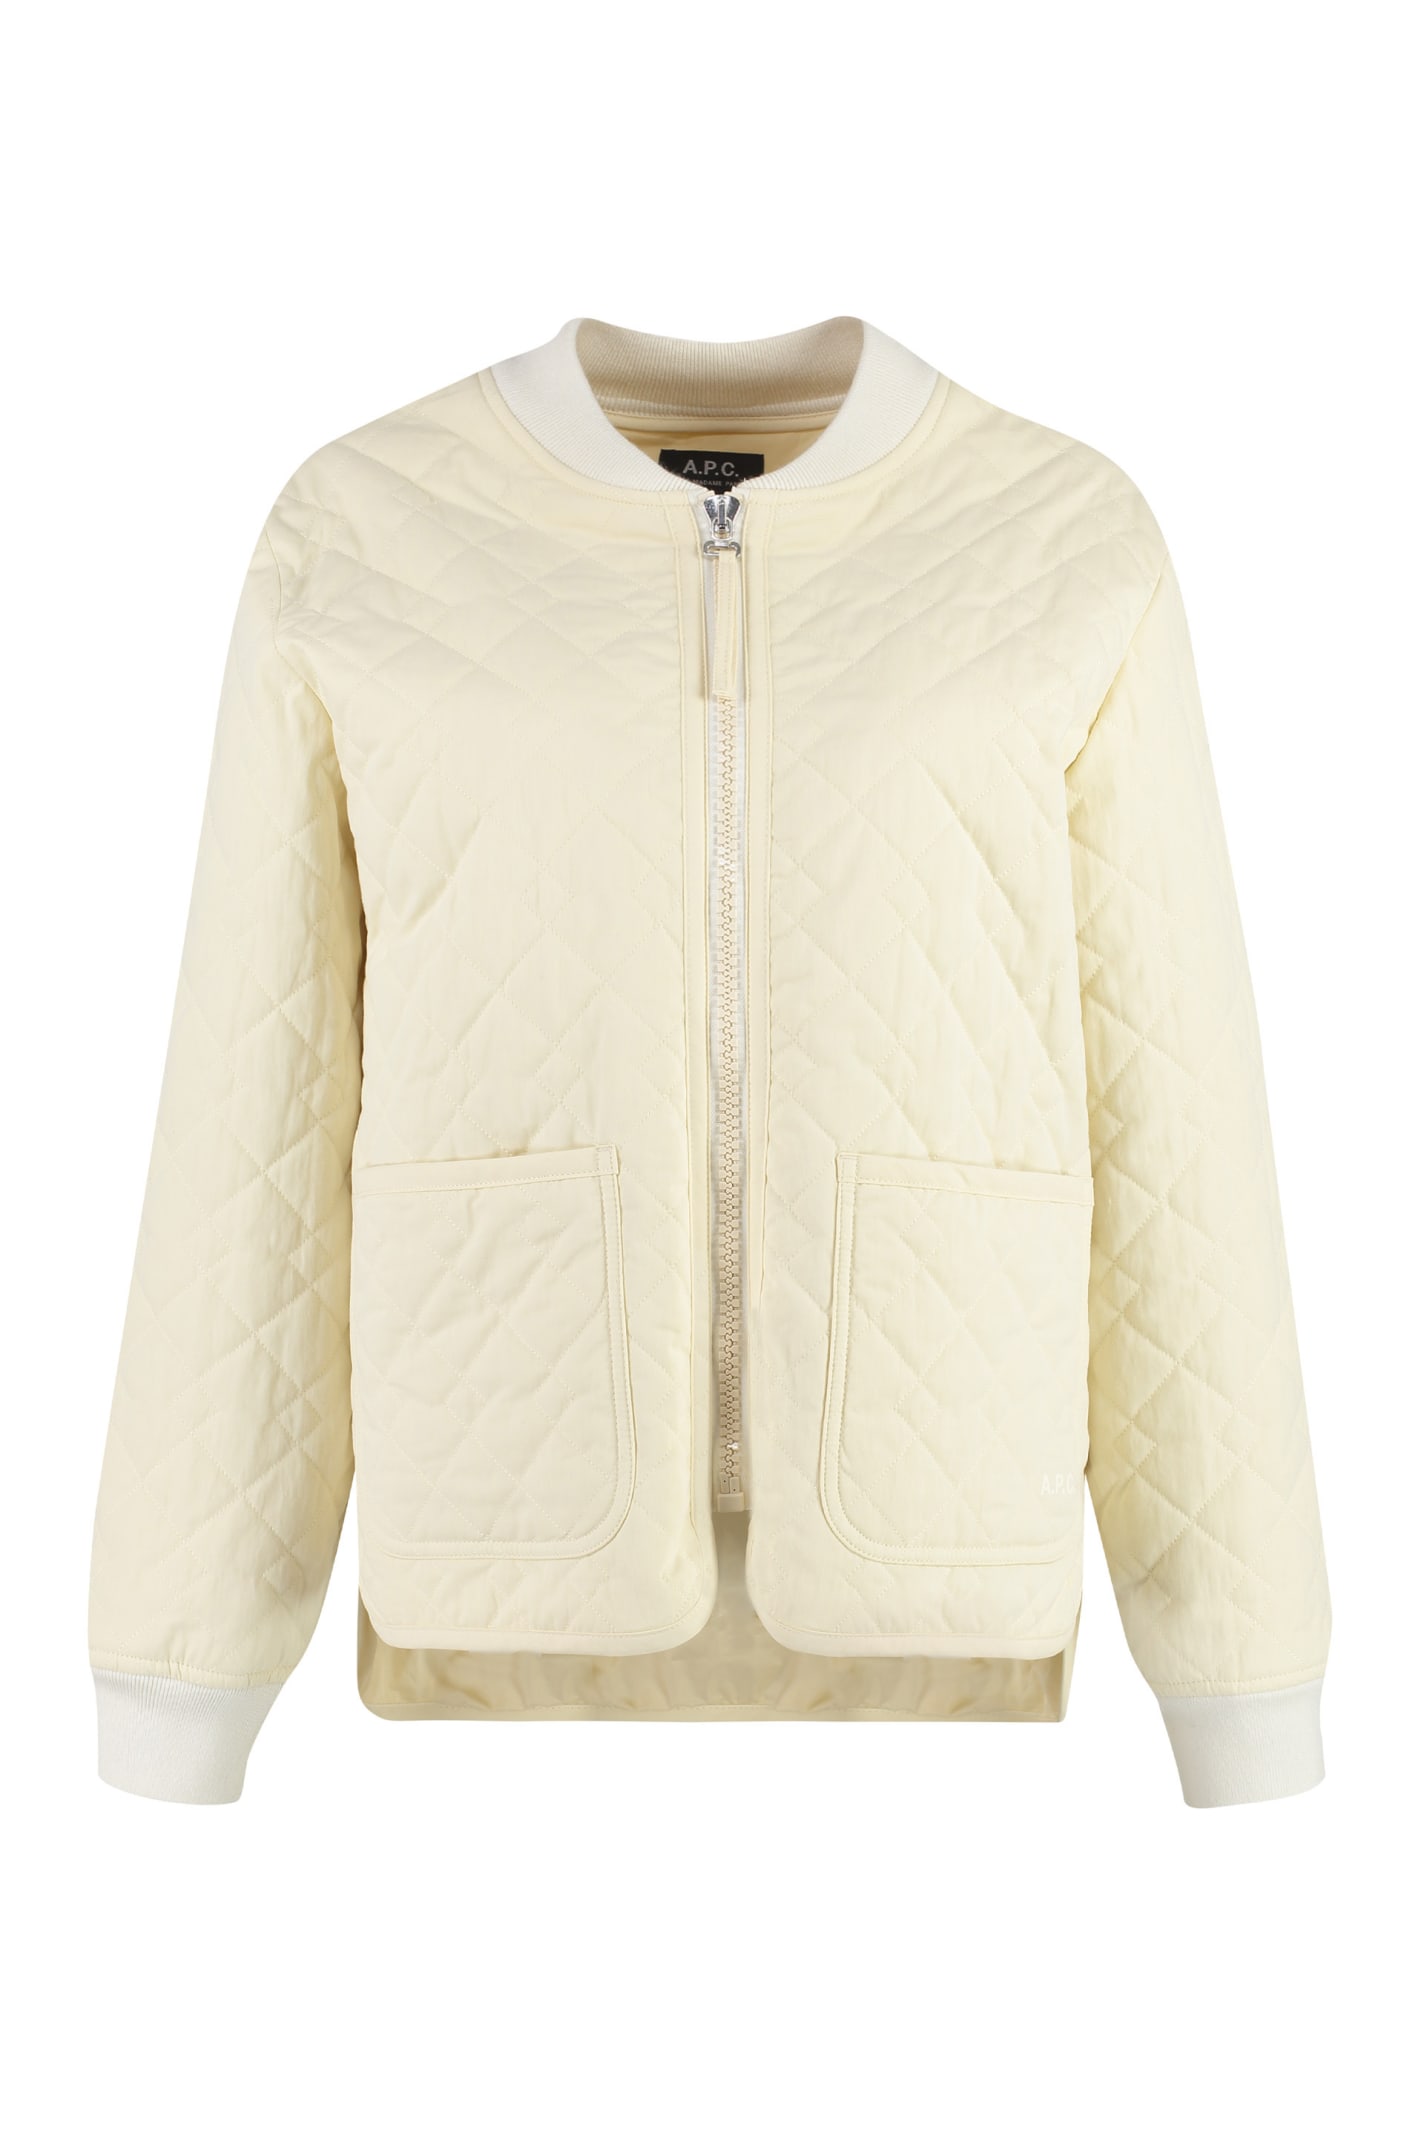 Apc Elea Zippered Cotton Jacket